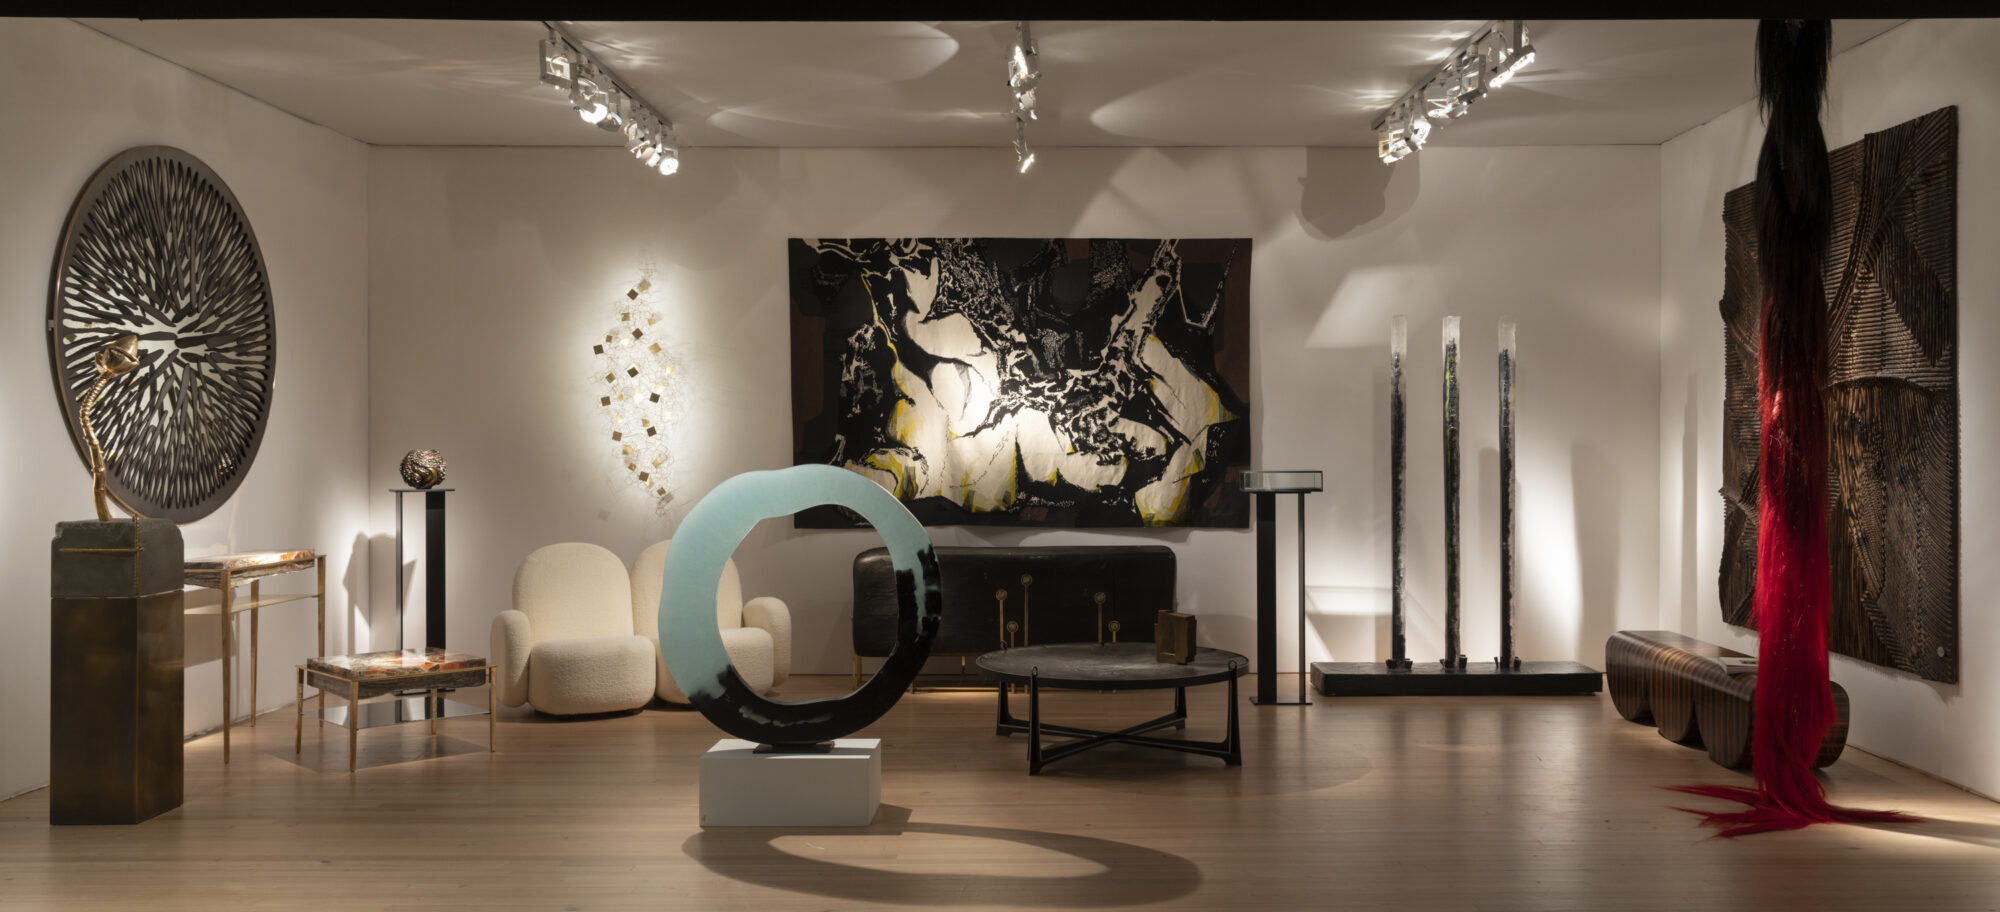 THE SALON ART + DESIGN NY - Galerie Negropontes